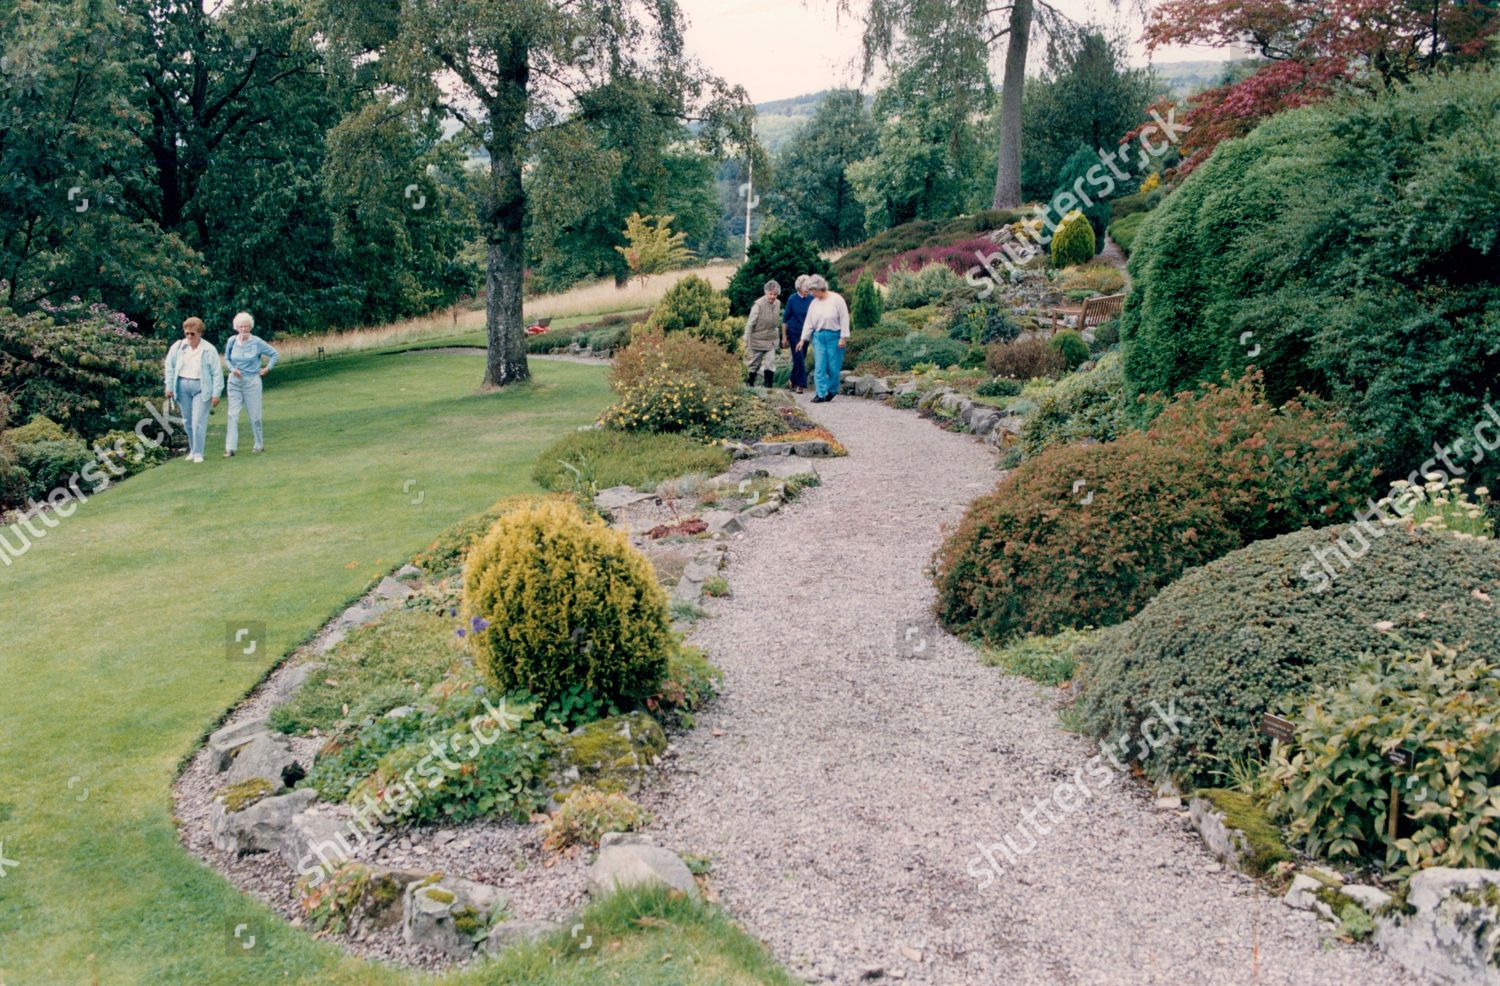 Lakeland horticultural society garden